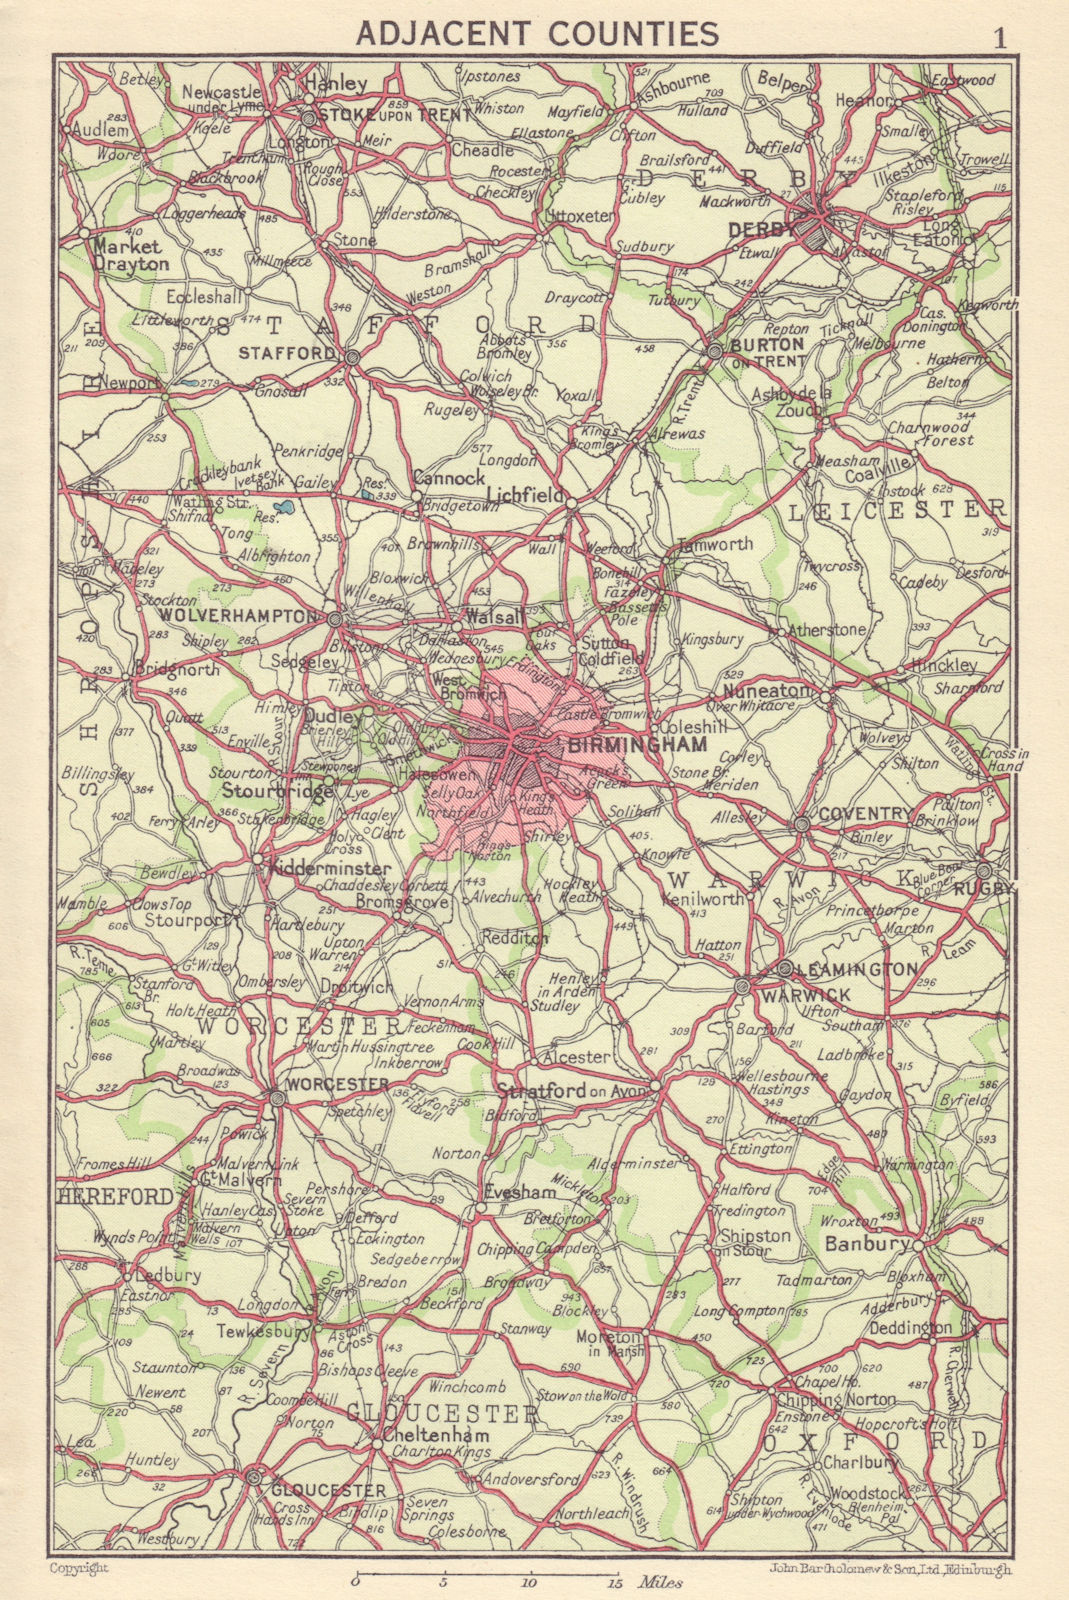 BIRMINGHAM Adjacent Counties. West Midlands. Derby Gloucester 1954 old map